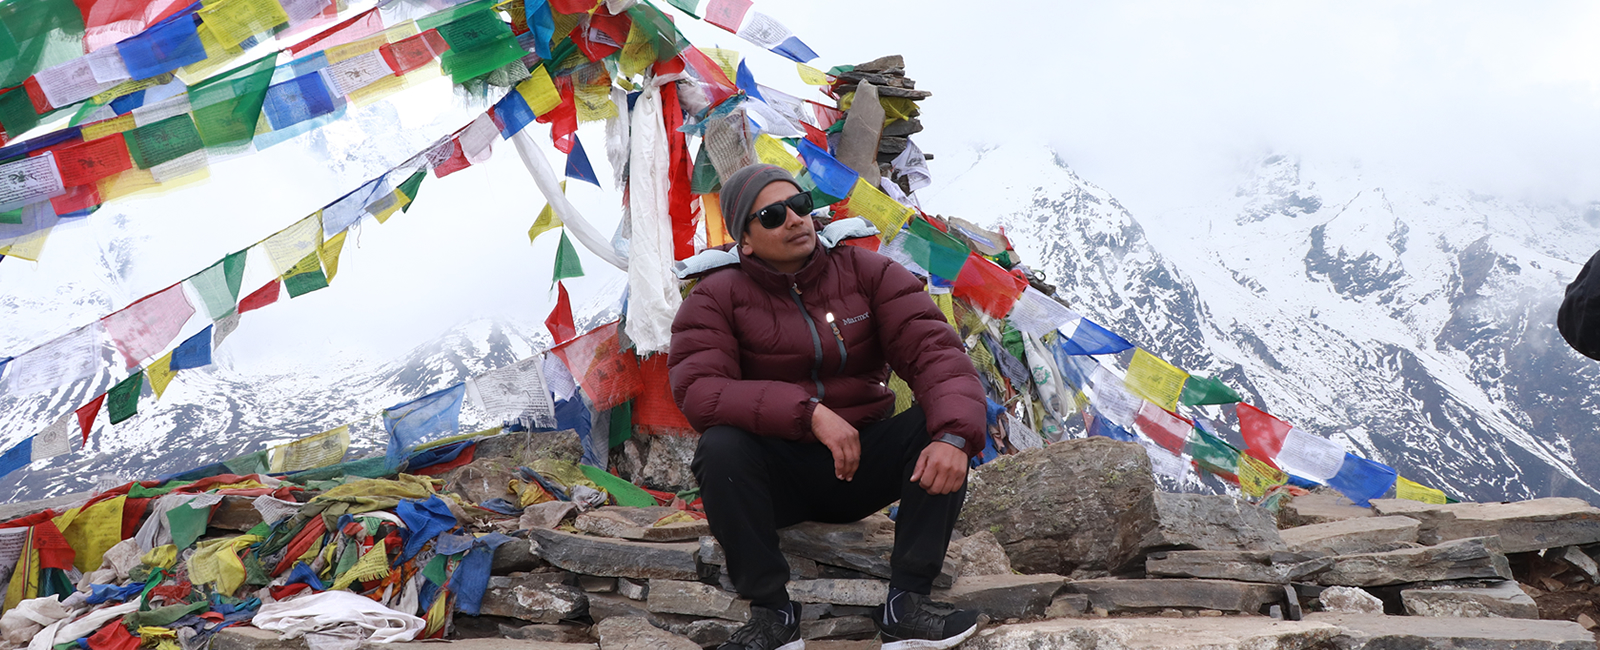 short and easy treks in Nepal